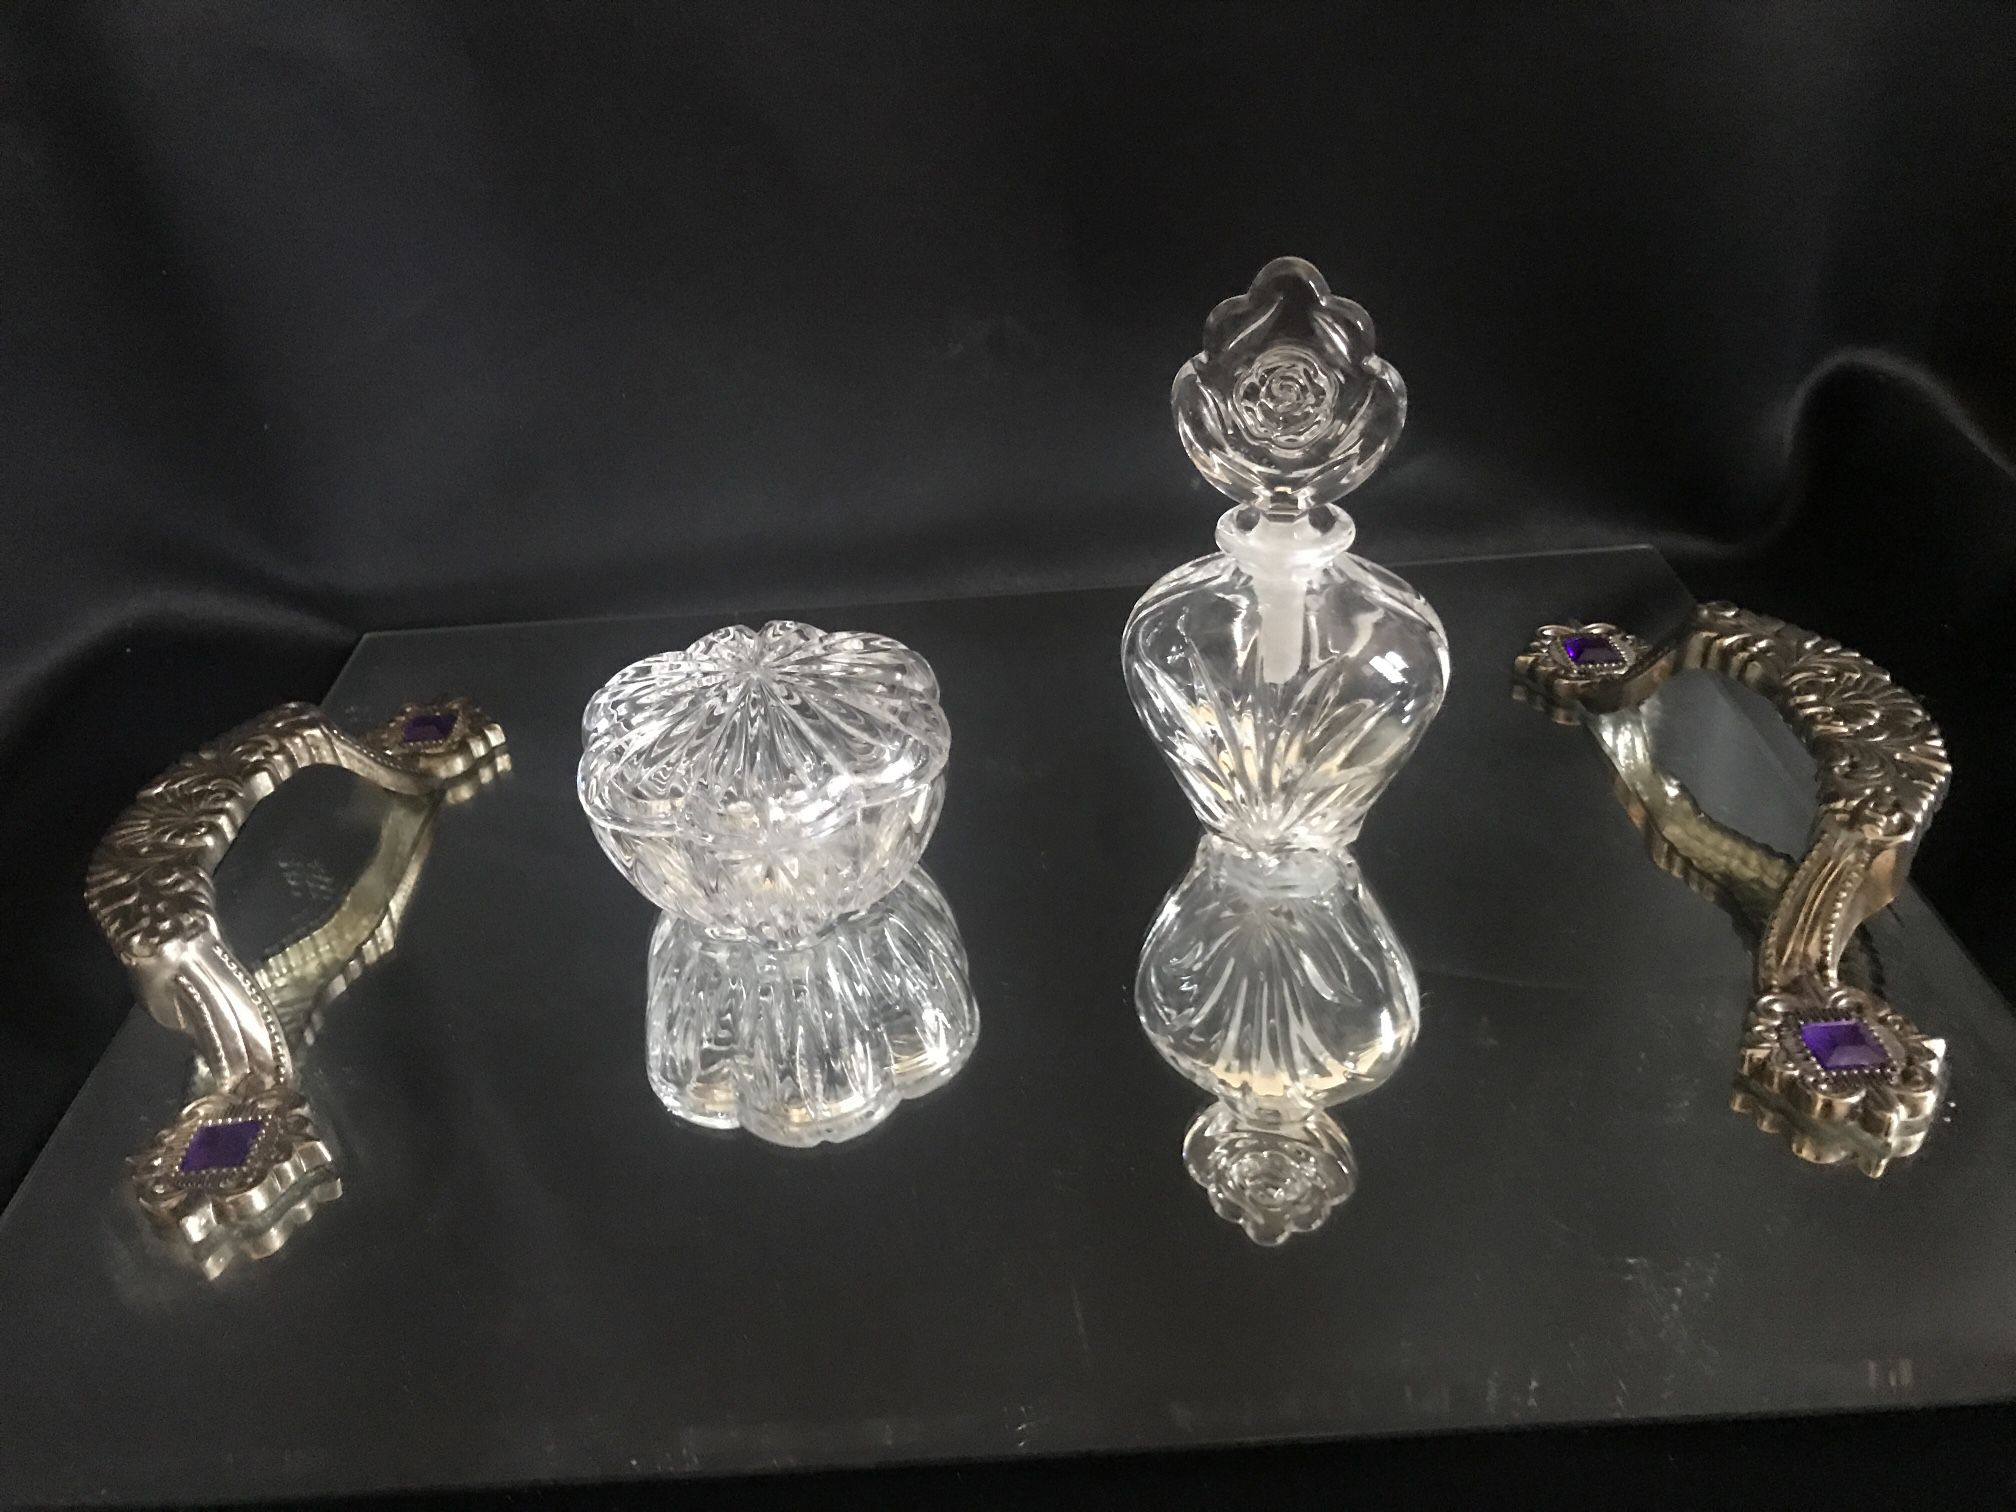 Princess house crystal perfume bottle and ring box